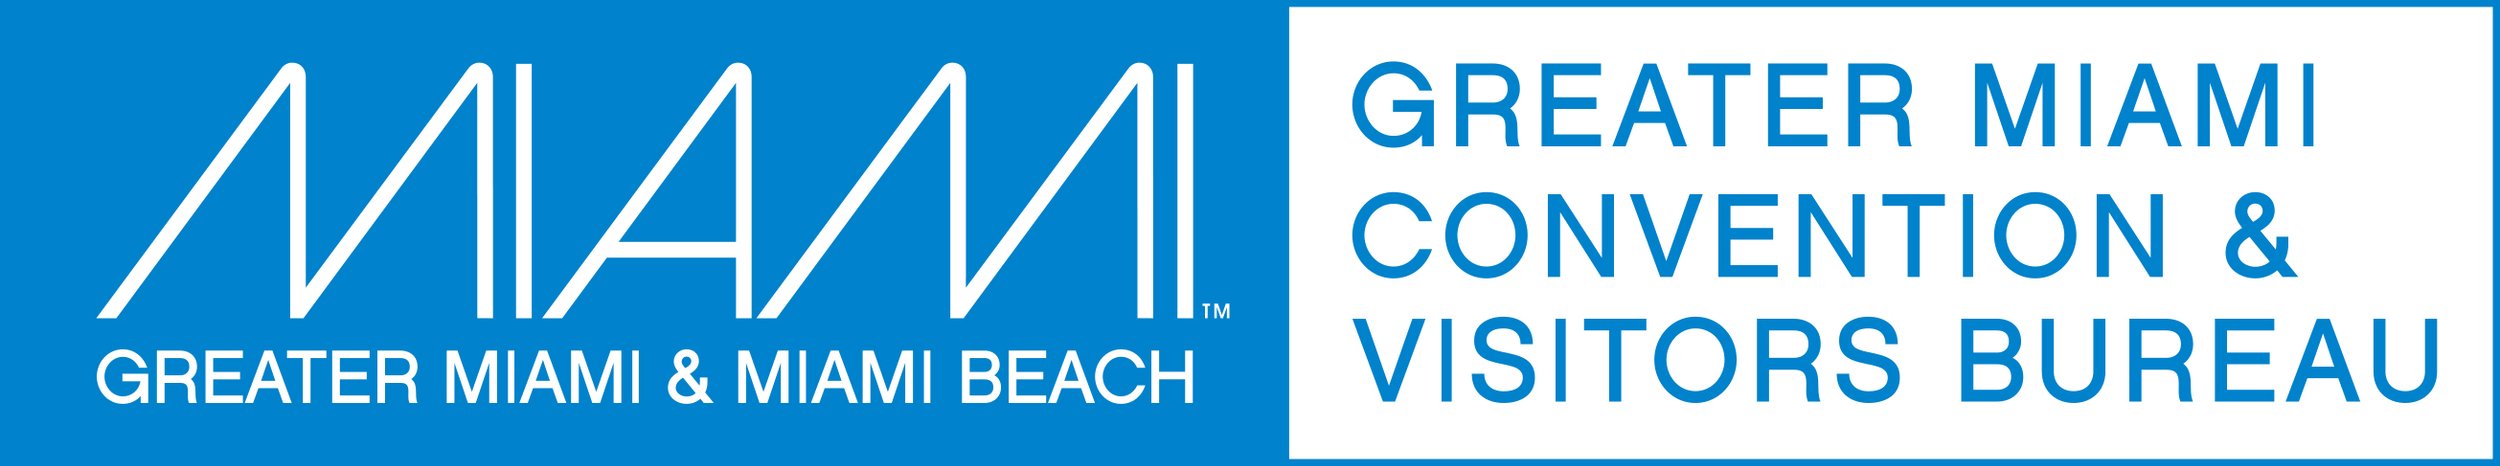 GMCVB_Corp_Logo_BLUE.jpg